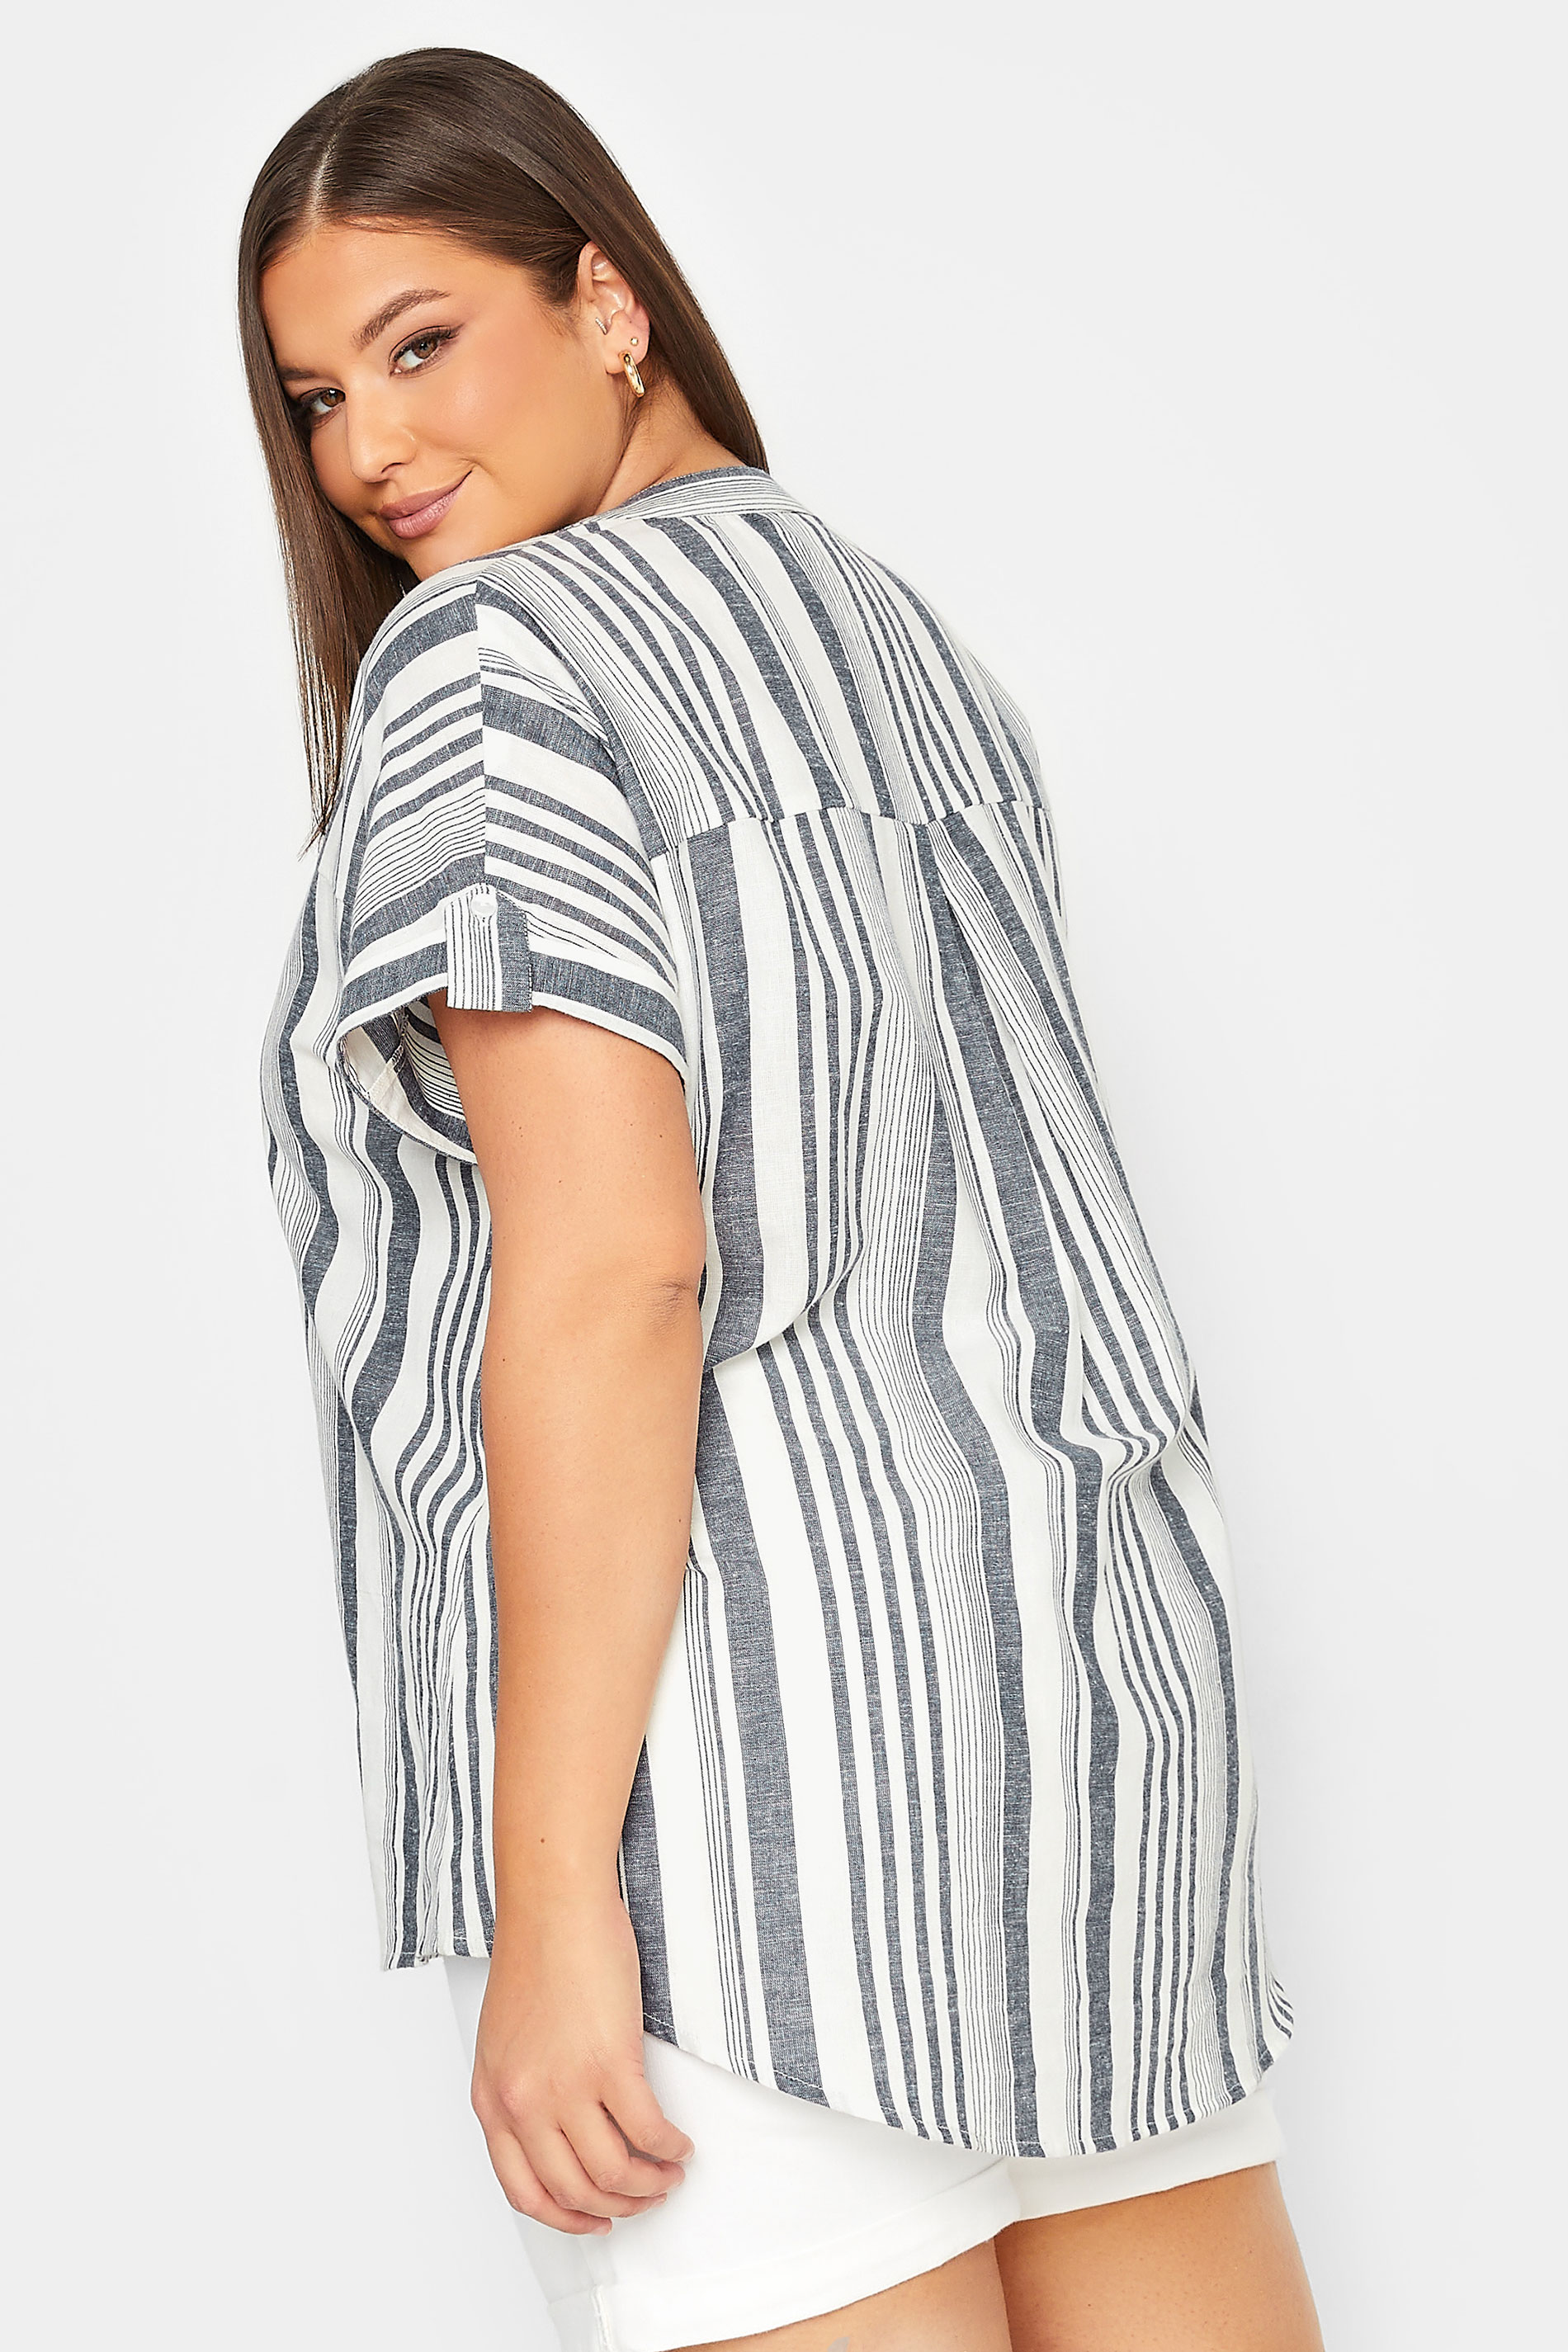 YOURS Plus Size Grey & White Stripe Print Button Through Shirt | Yours Clothing 3